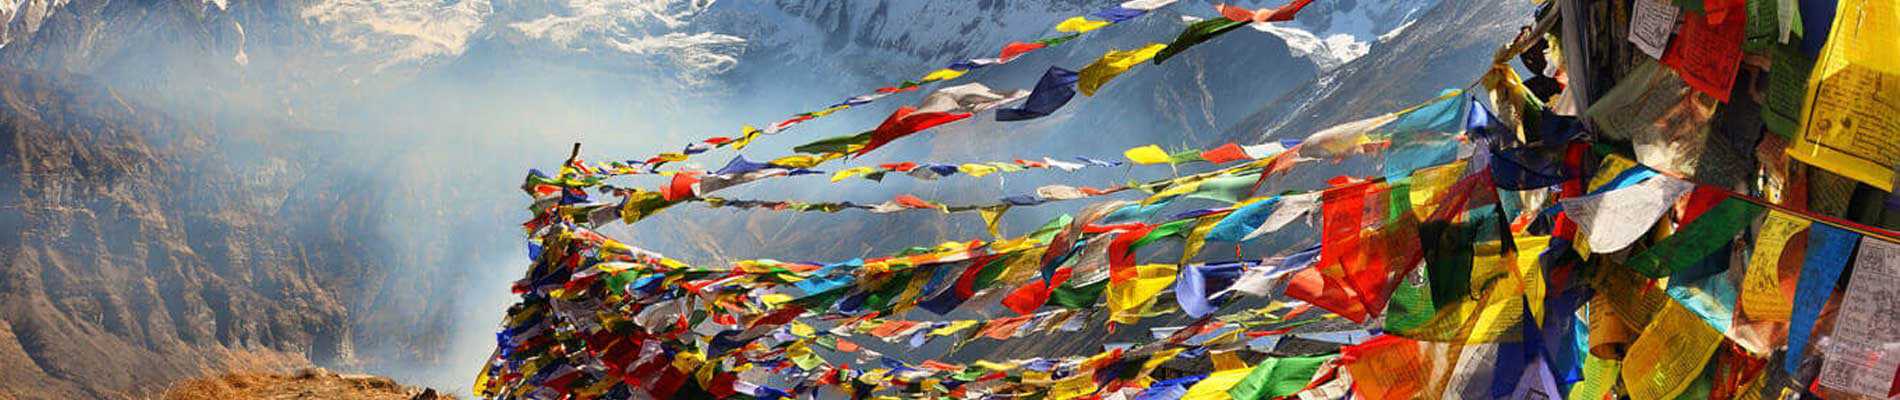 Непал «Величественная Аннапурна» (2)